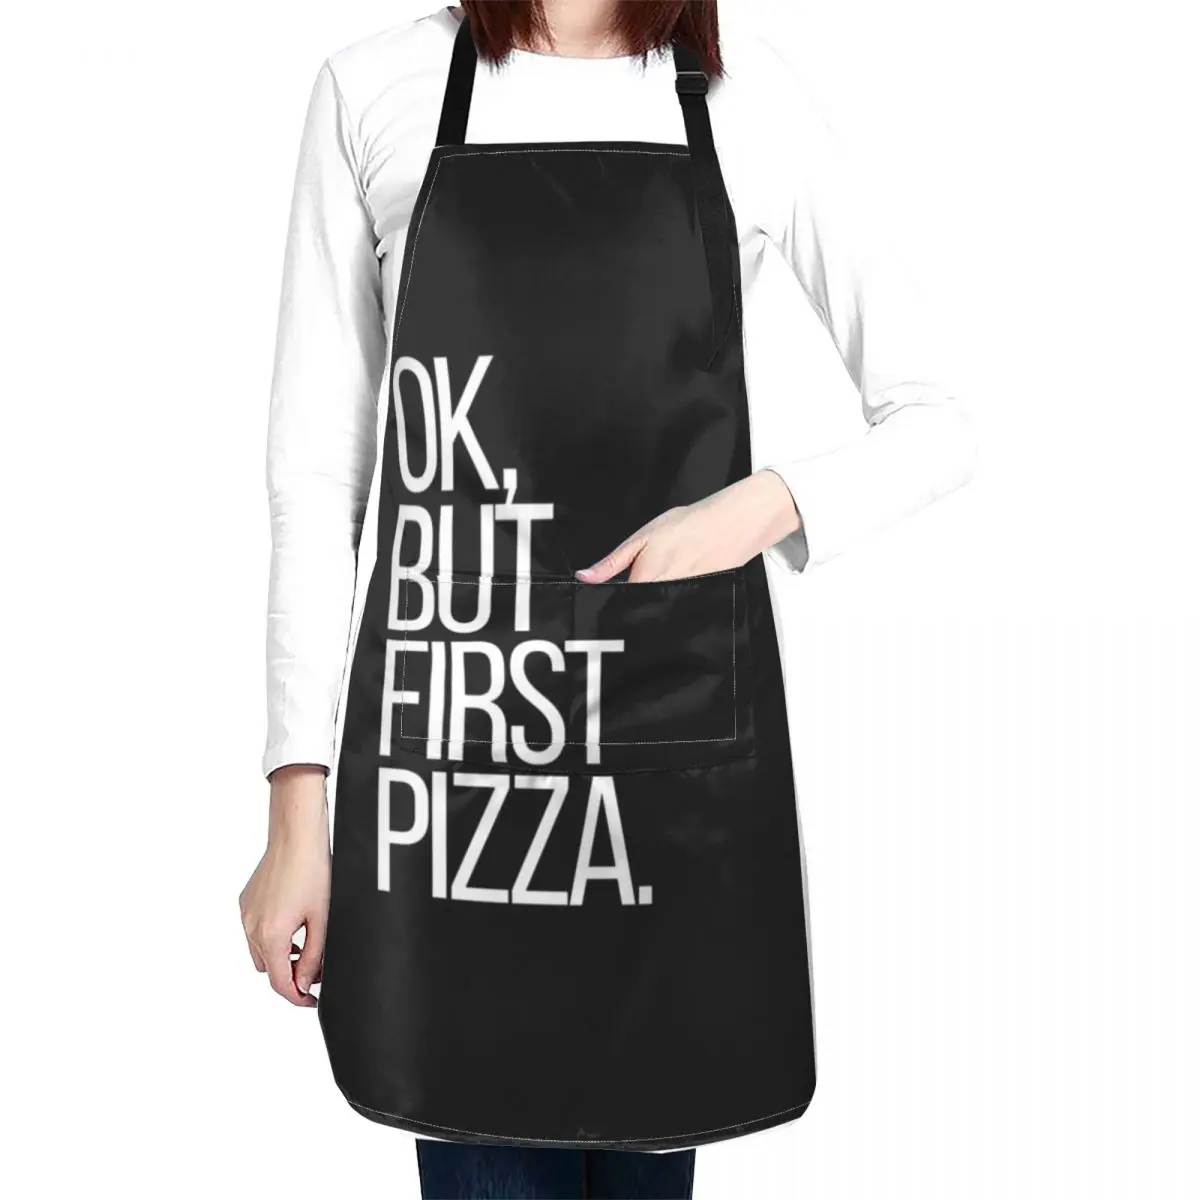 

Ok, but first Pizza Apron Apron Ladies Woman Kitchen Apron Apron Kitchen painting apron